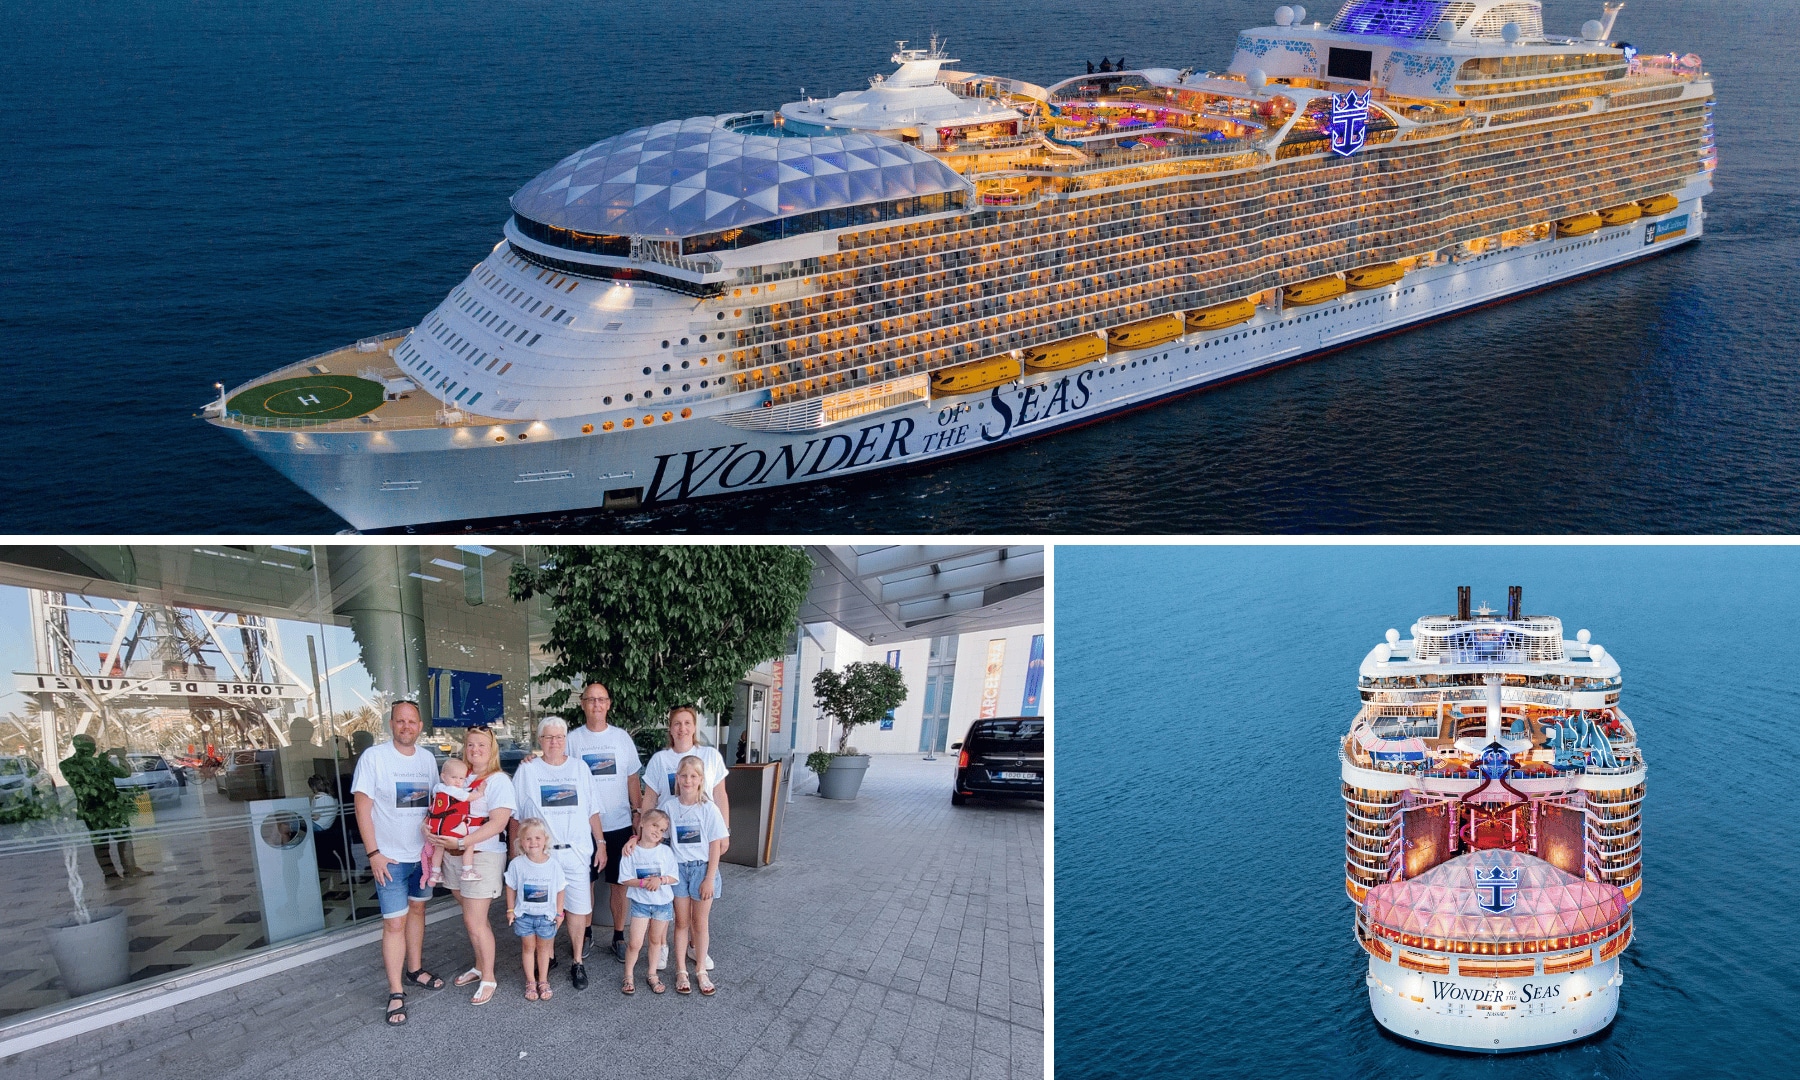 Royal-caribbean-Wonder-of-the-seas-blog-grootste-cruiseschip